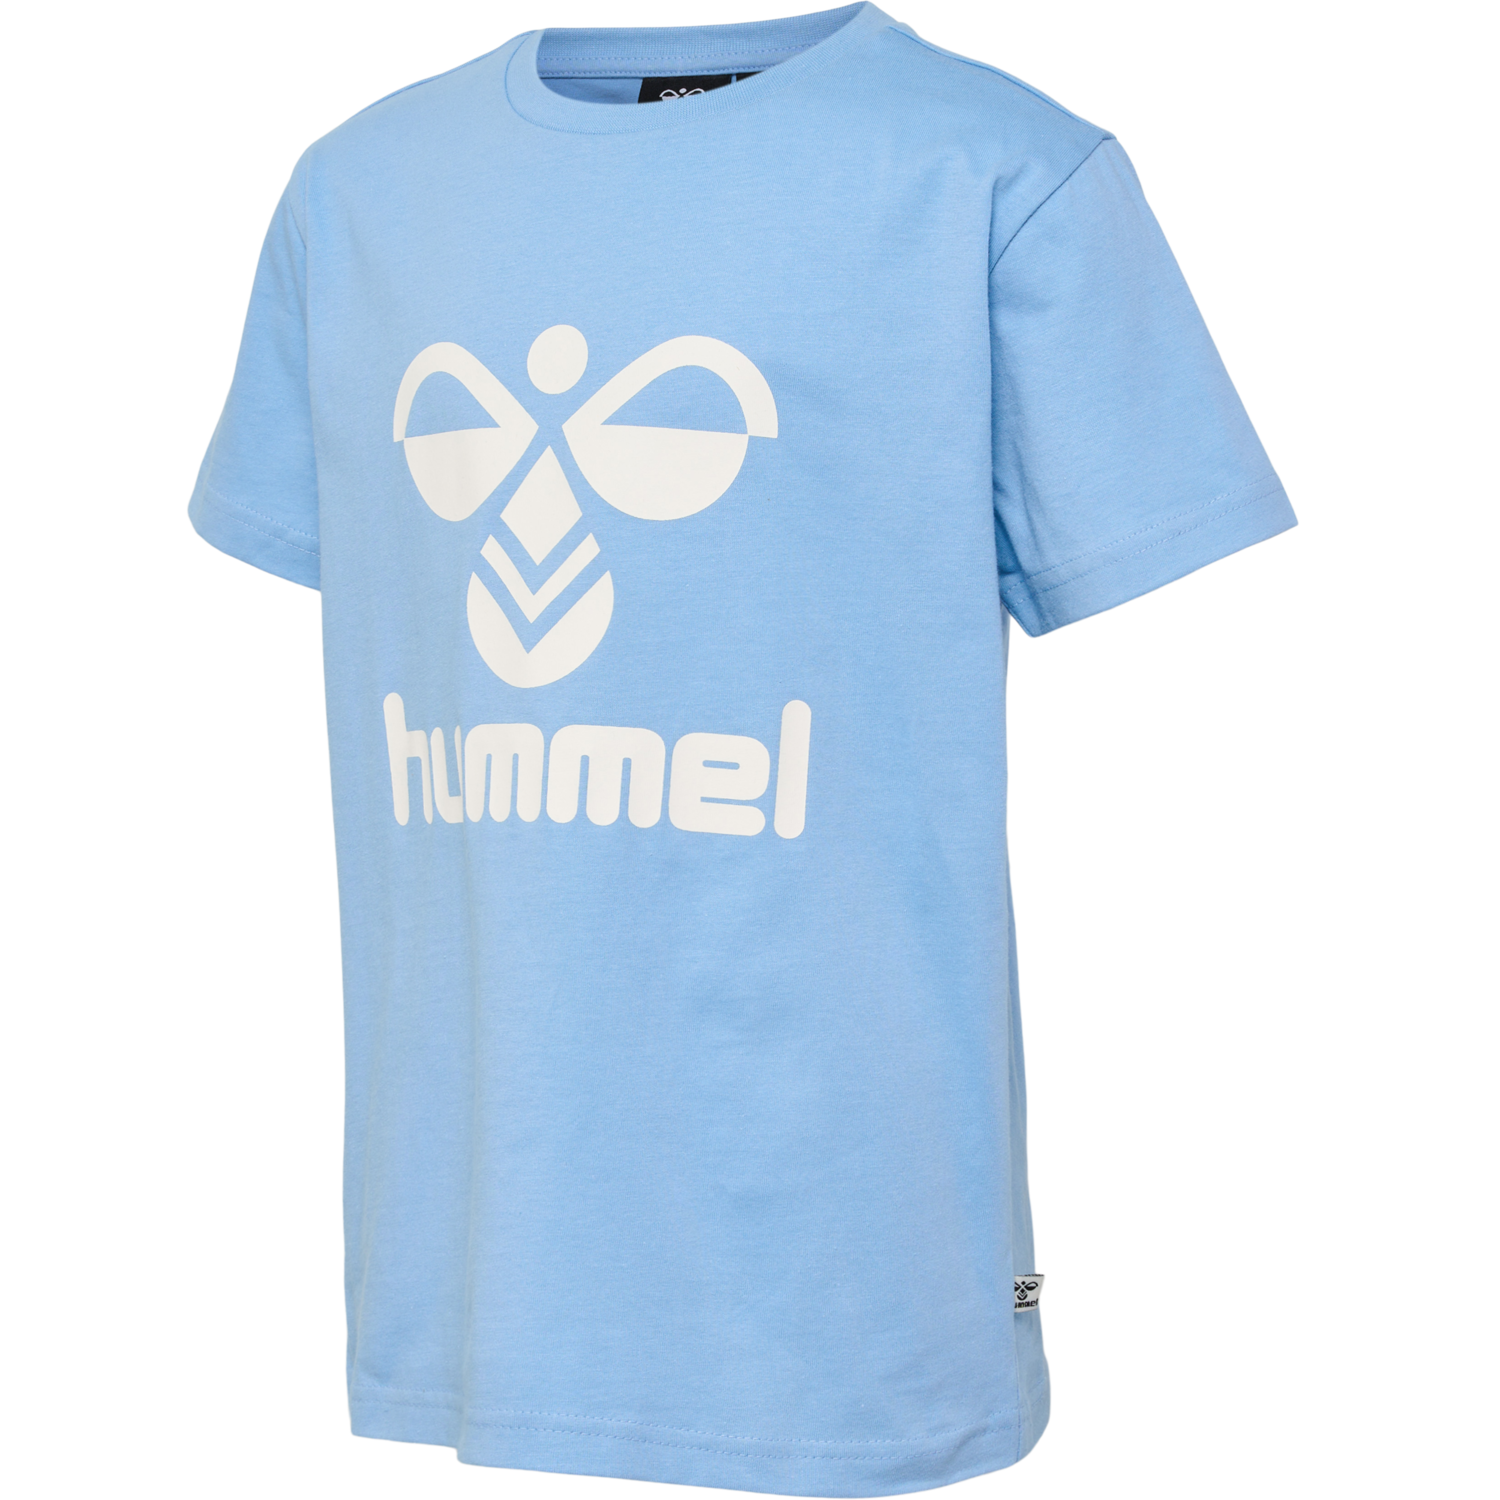 Hummel Hmltres T-Shirt S/S, t-skjorte, barn - AYA SPORT AS | 